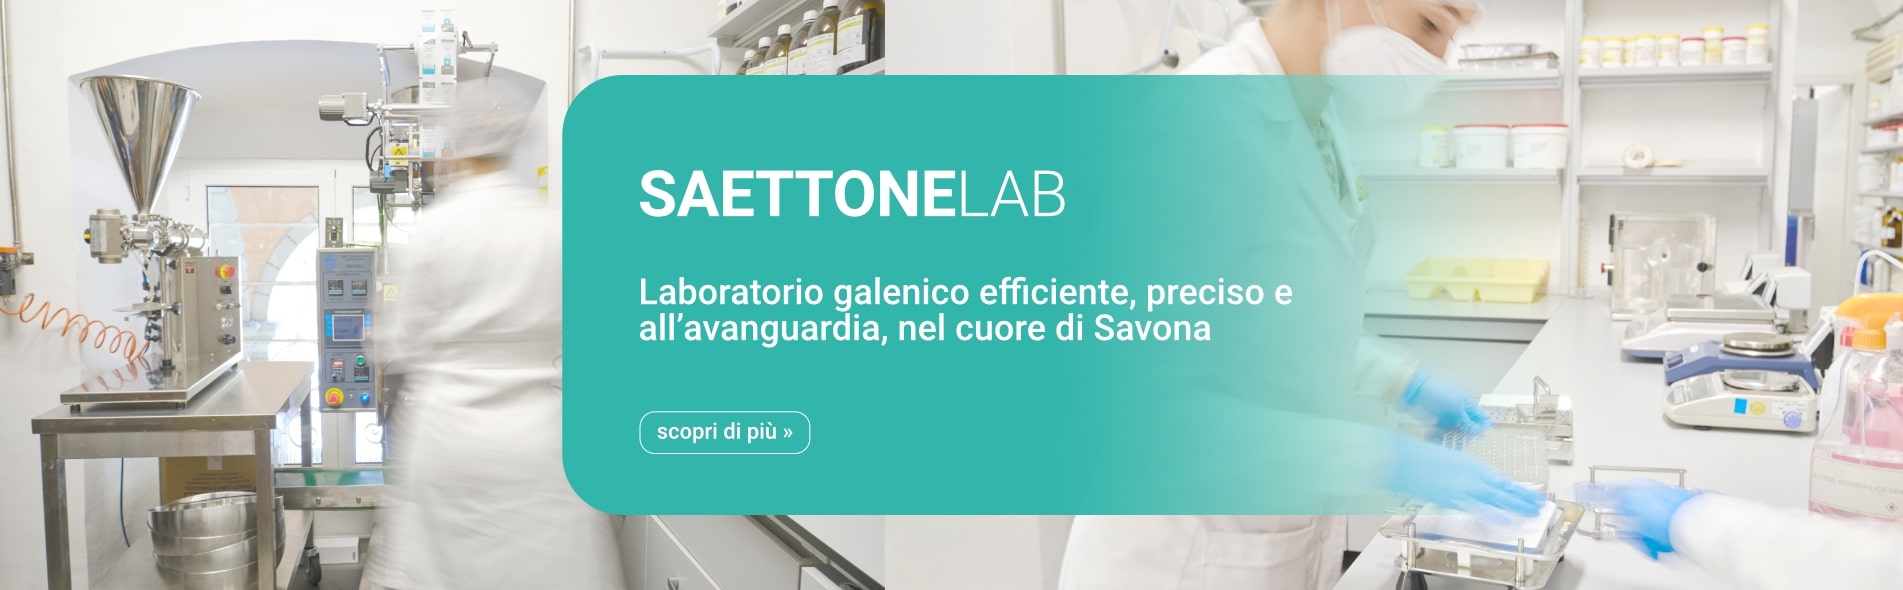 Saettone Lab